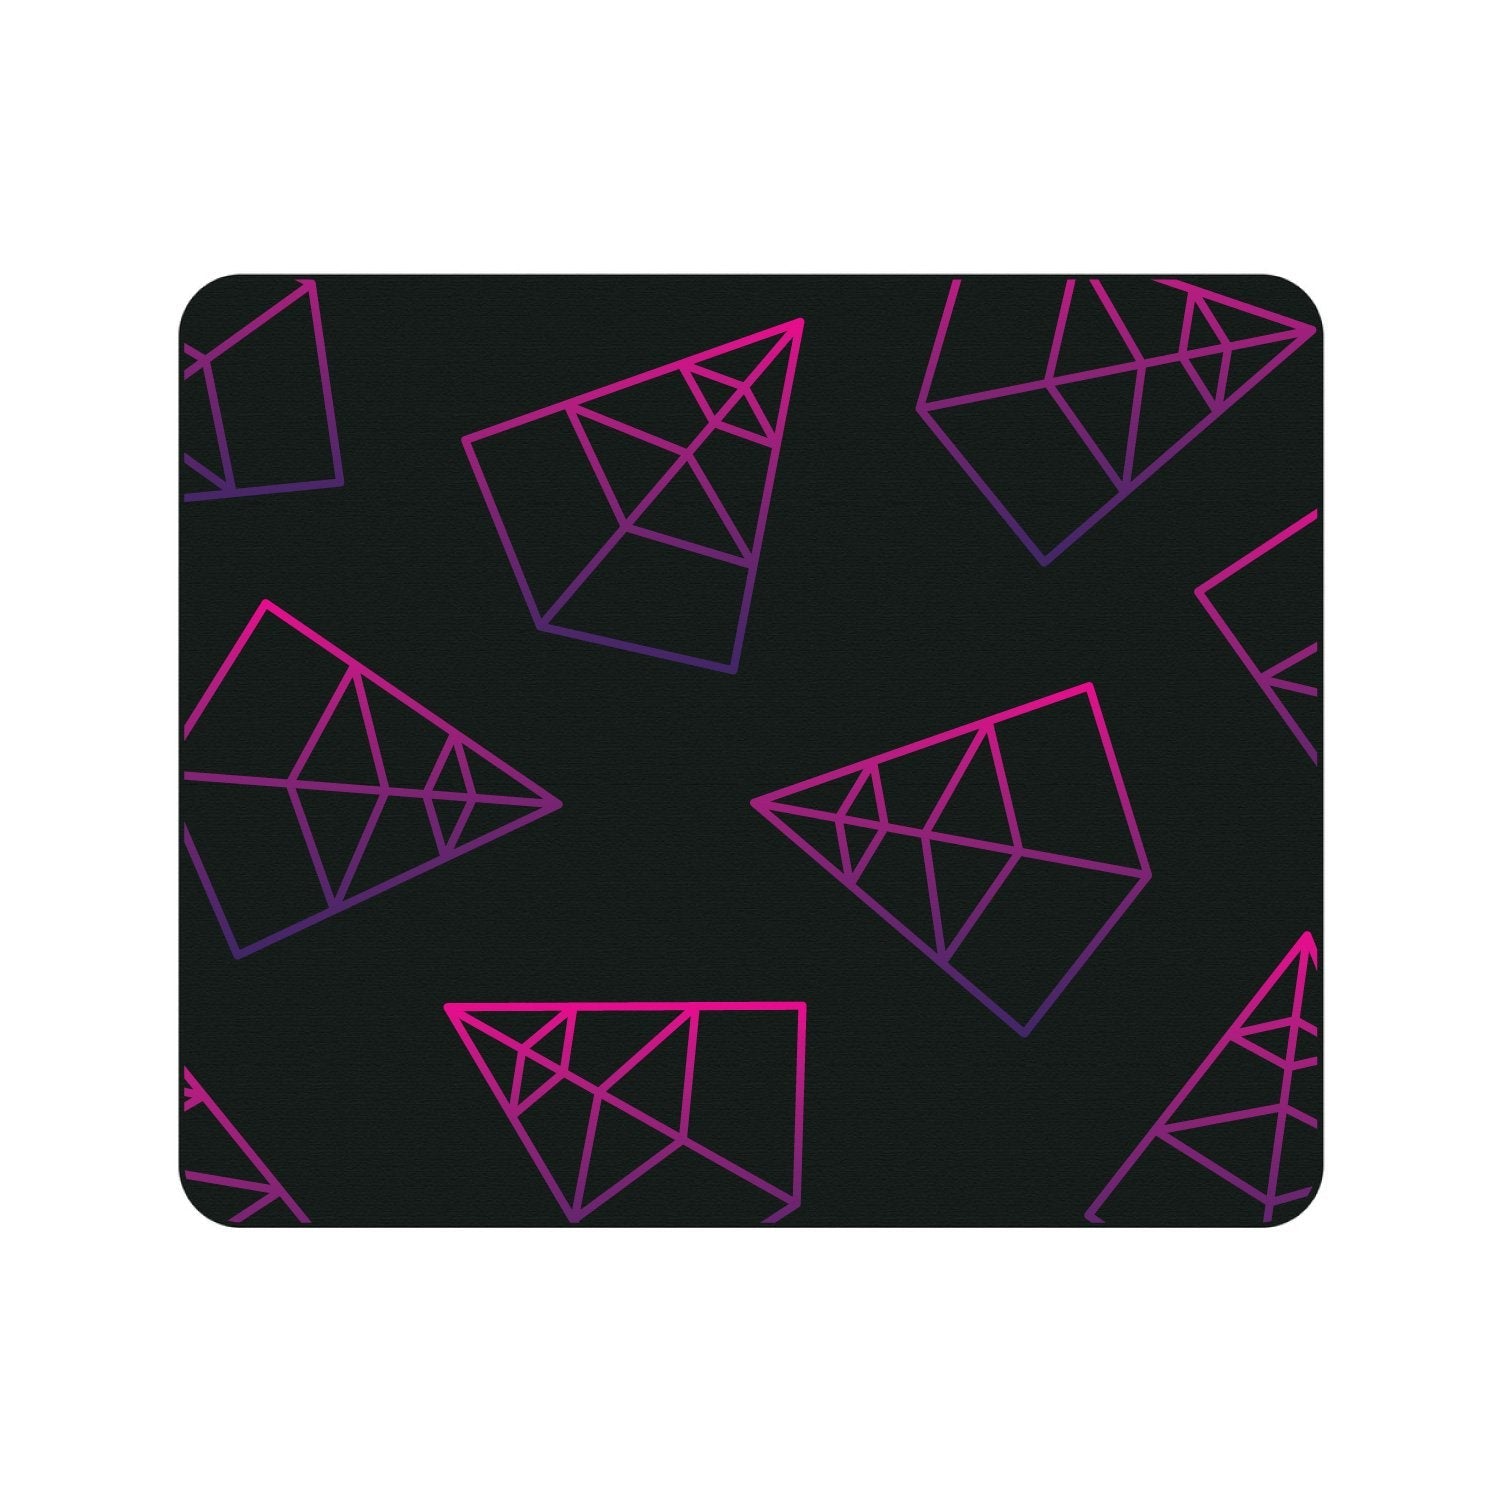 OTM Prints Black Mouse Pad, Pyramids Pink & Purple